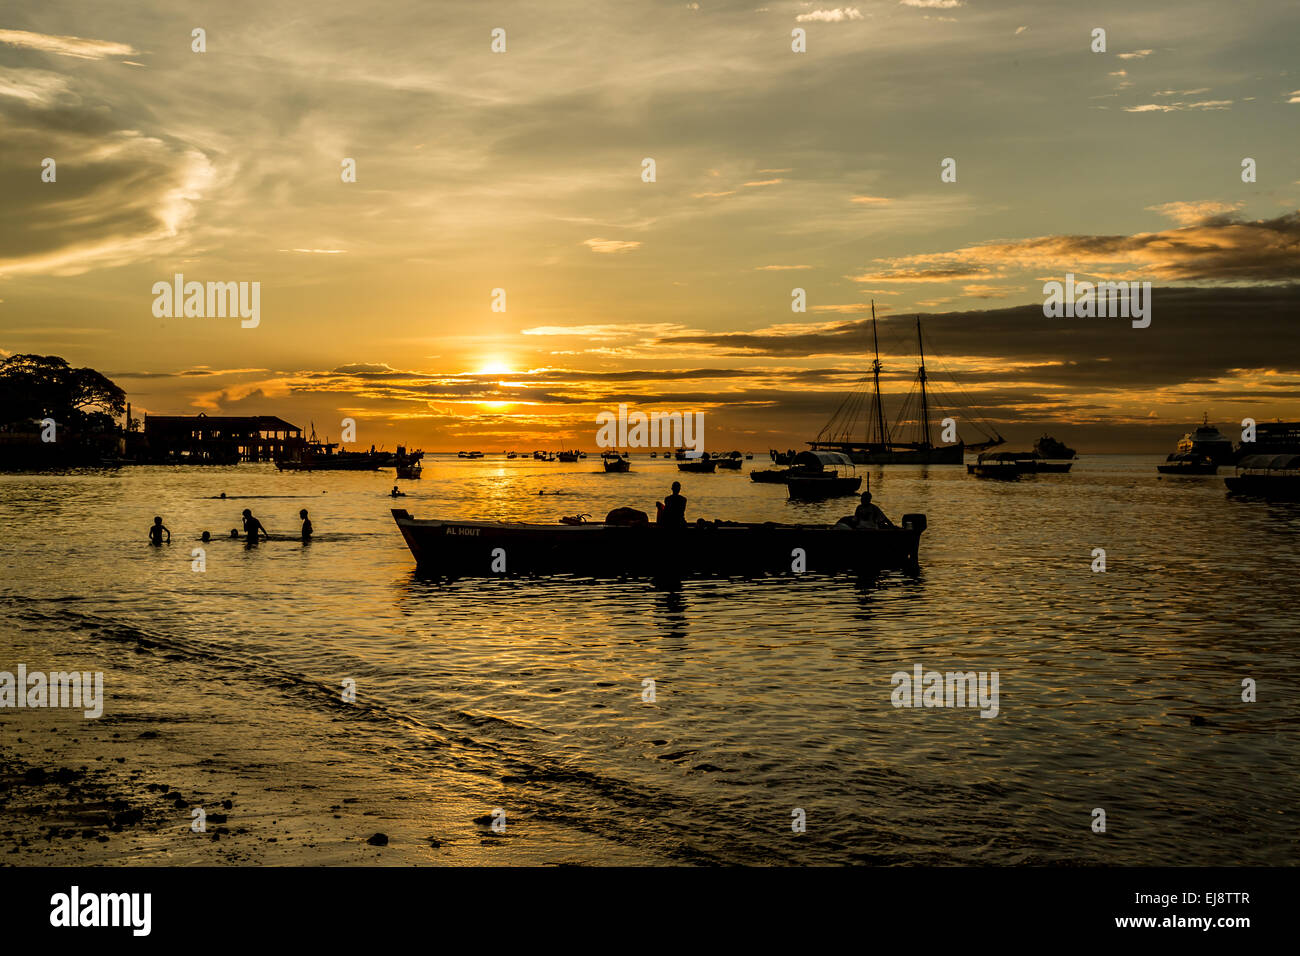 Sunset on the Indian Ocean Stock Photo